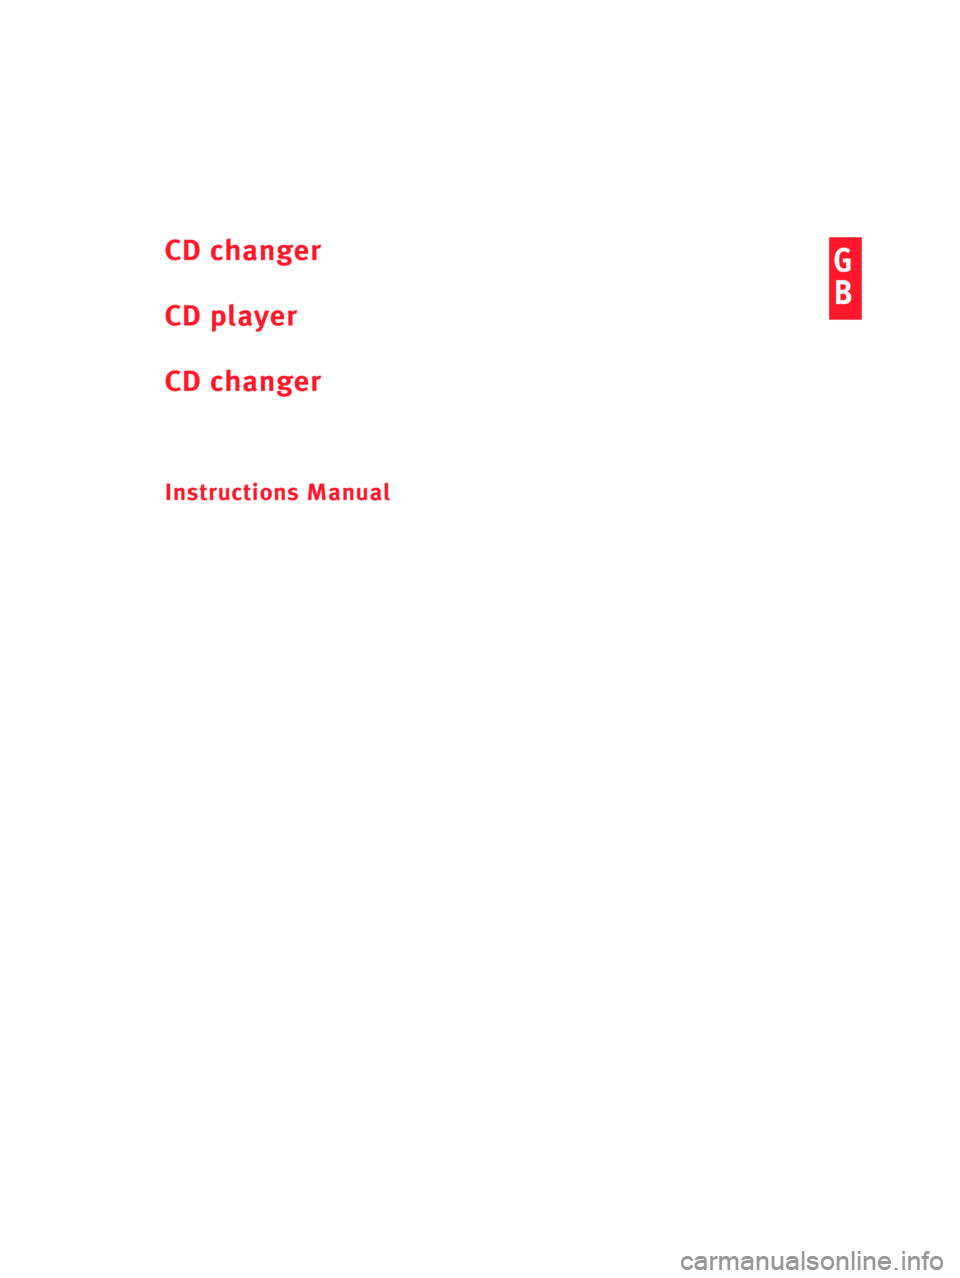 Seat Cordoba 2006  COMPACT DISC G
B
CD changer 
CD player
CD changer
Instructions Manual  